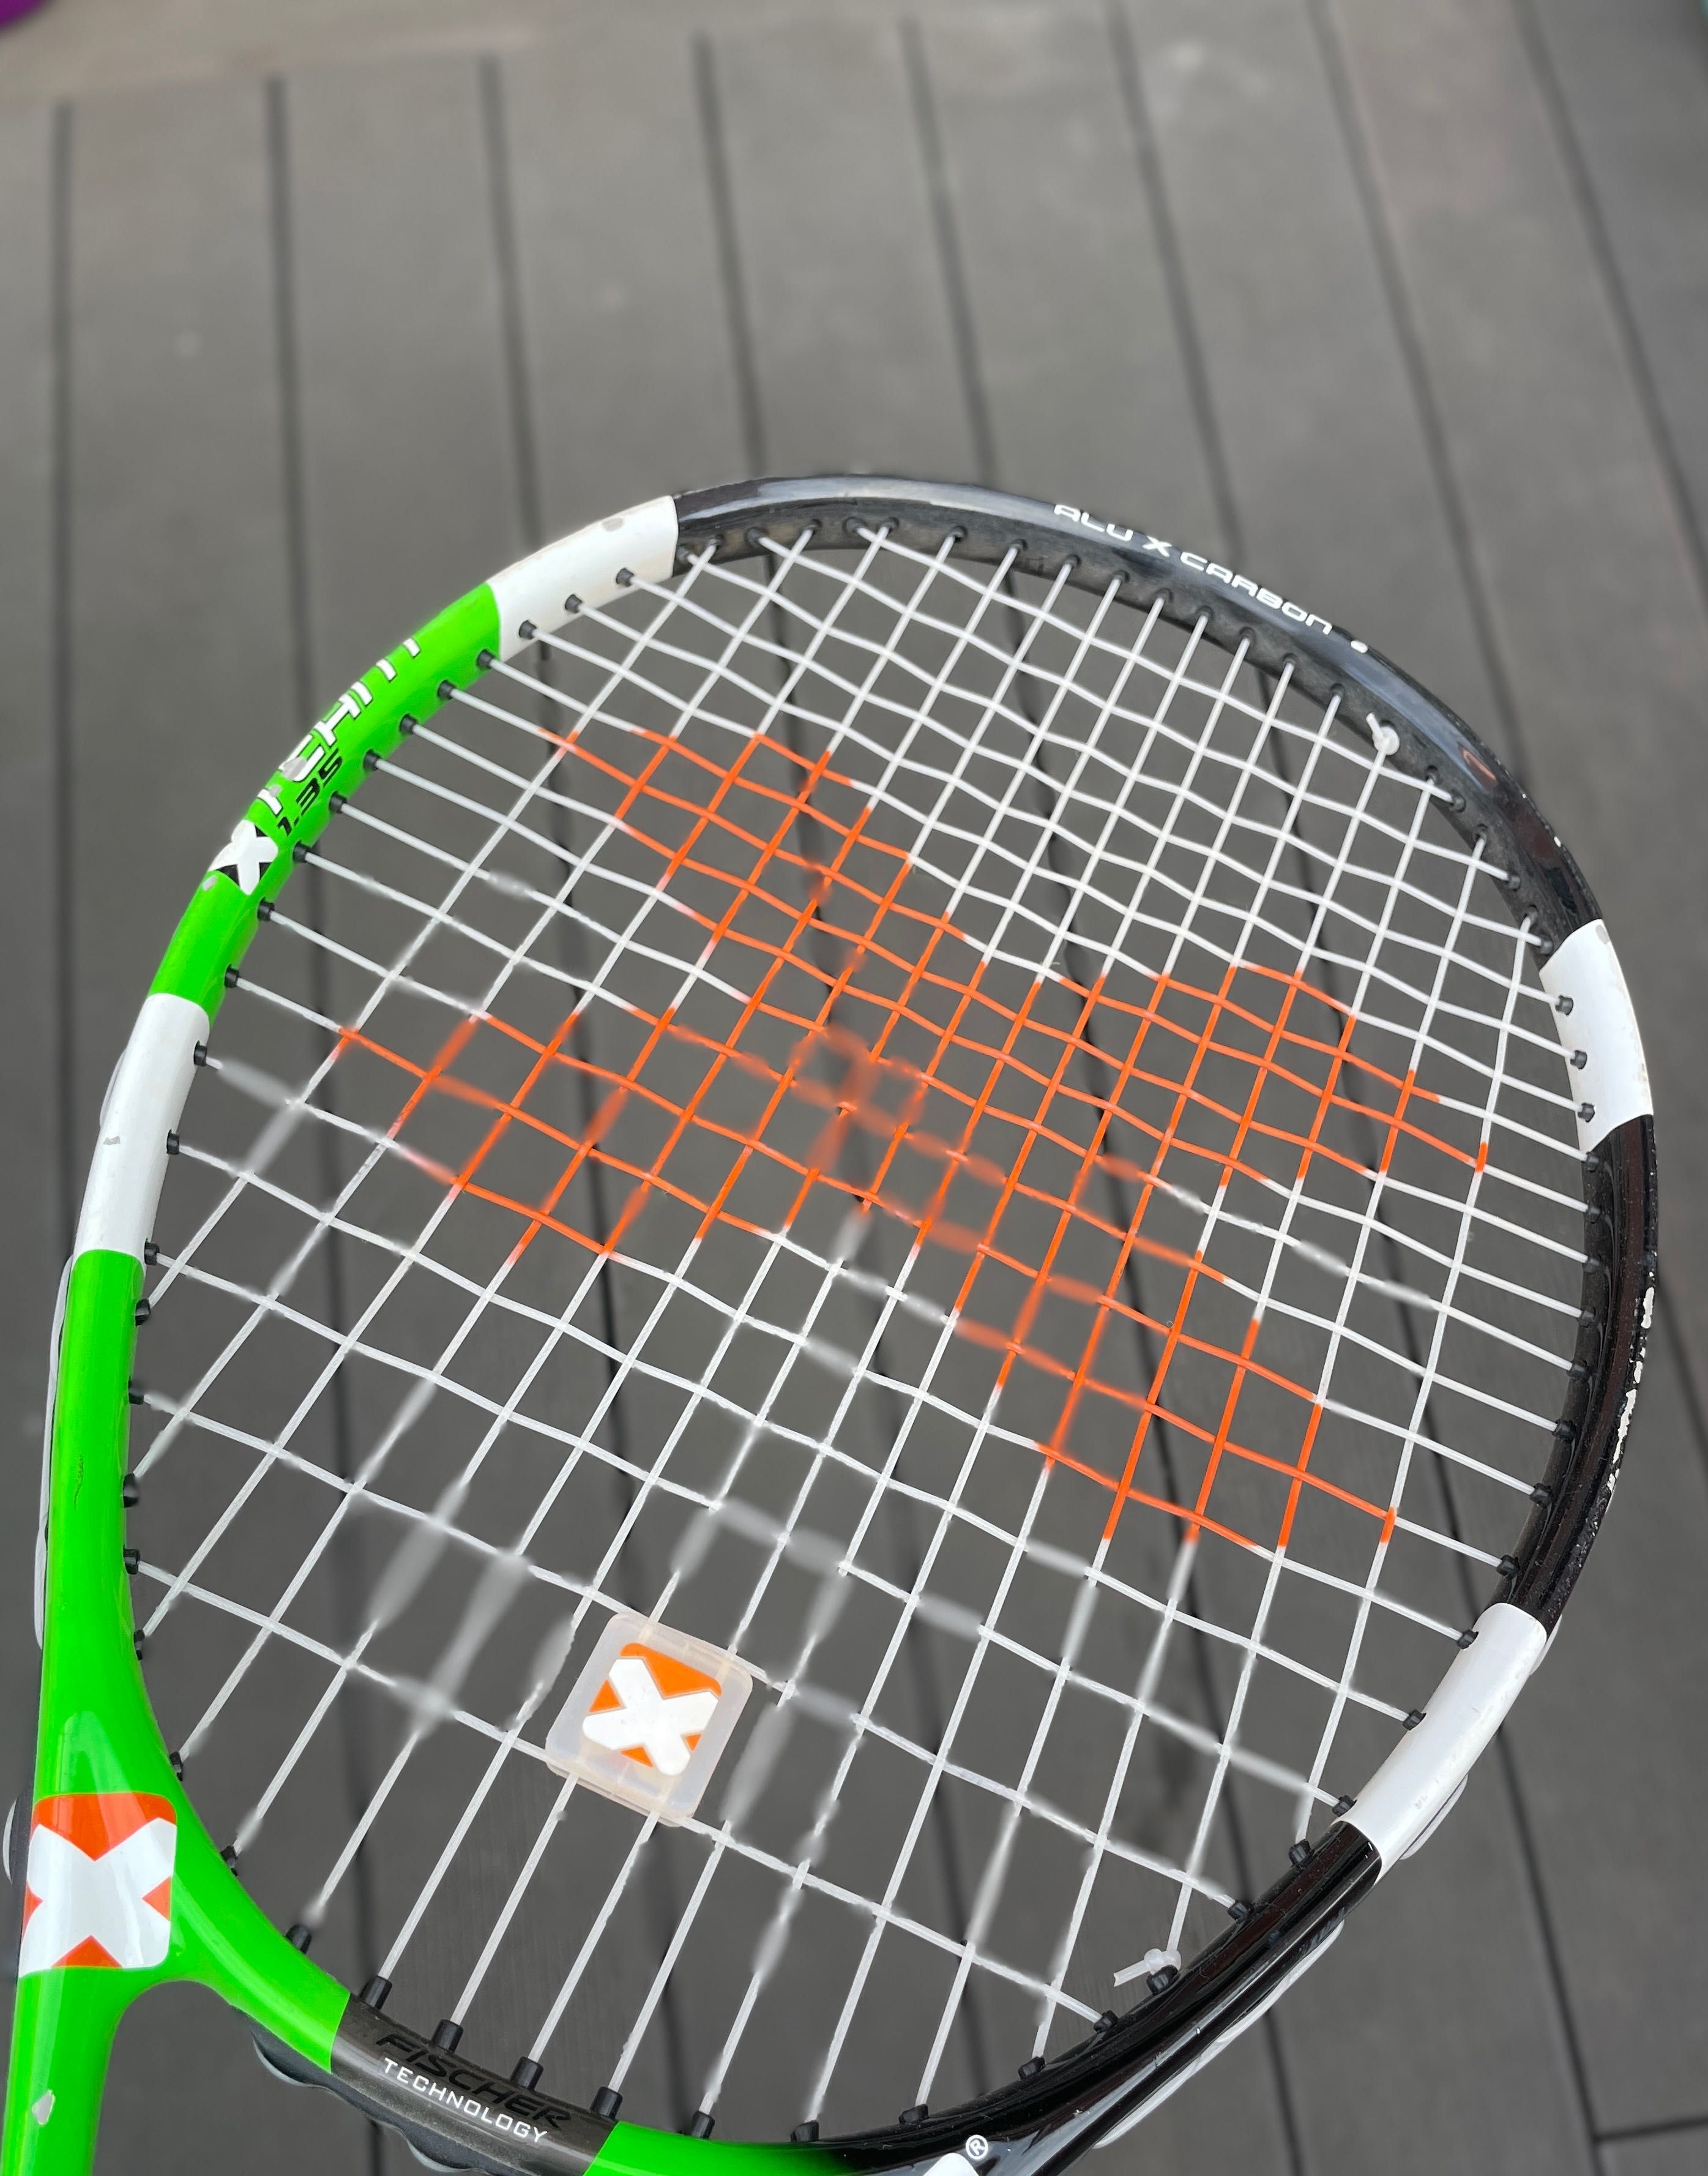 Raquete de ténis - Pacific criança